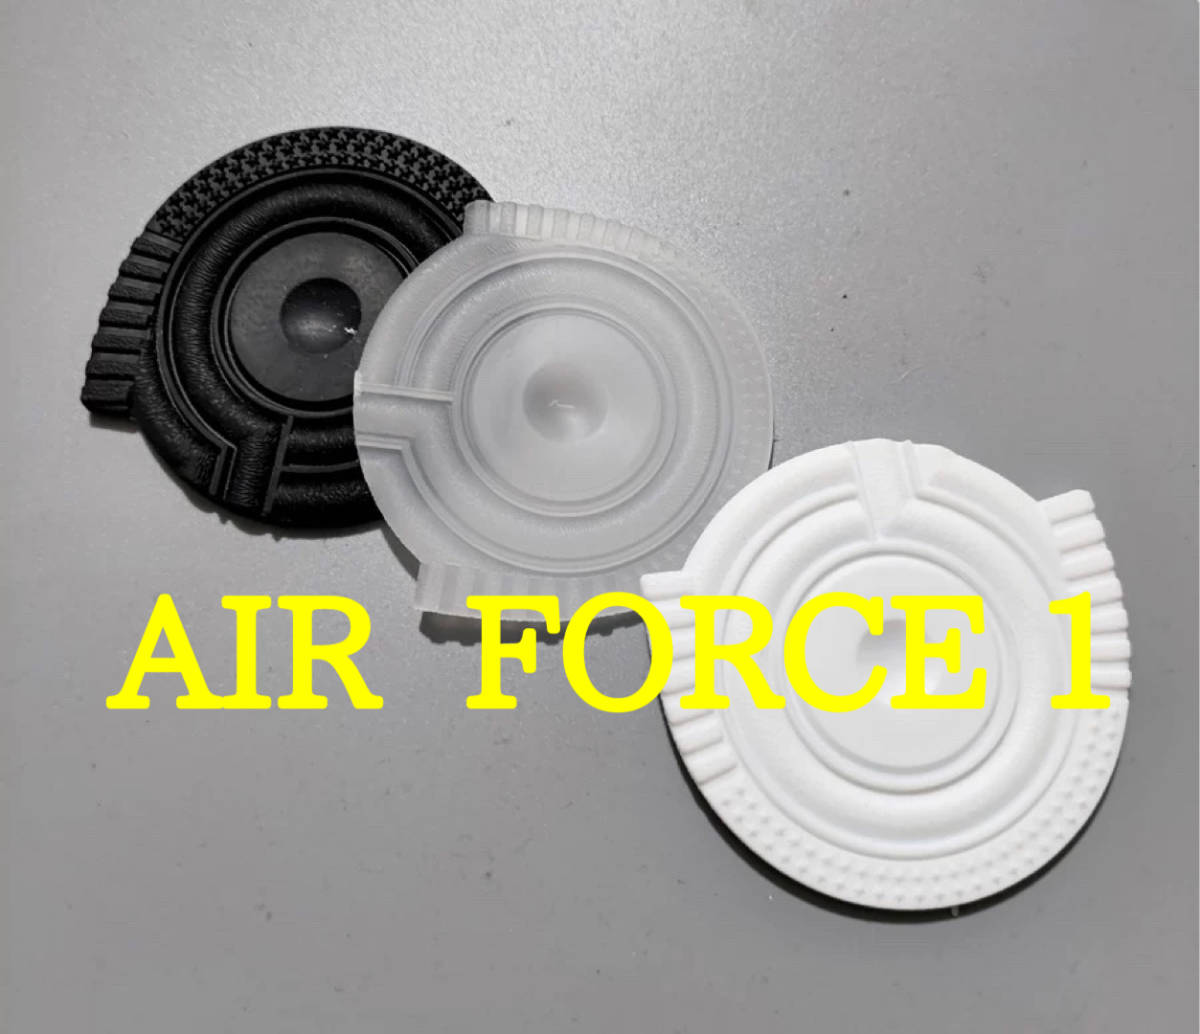 AIR force 1 ヒールプロテクター Travis supreme off-white jordan 1 dunk Union unc jordan1 ソールガードの画像1